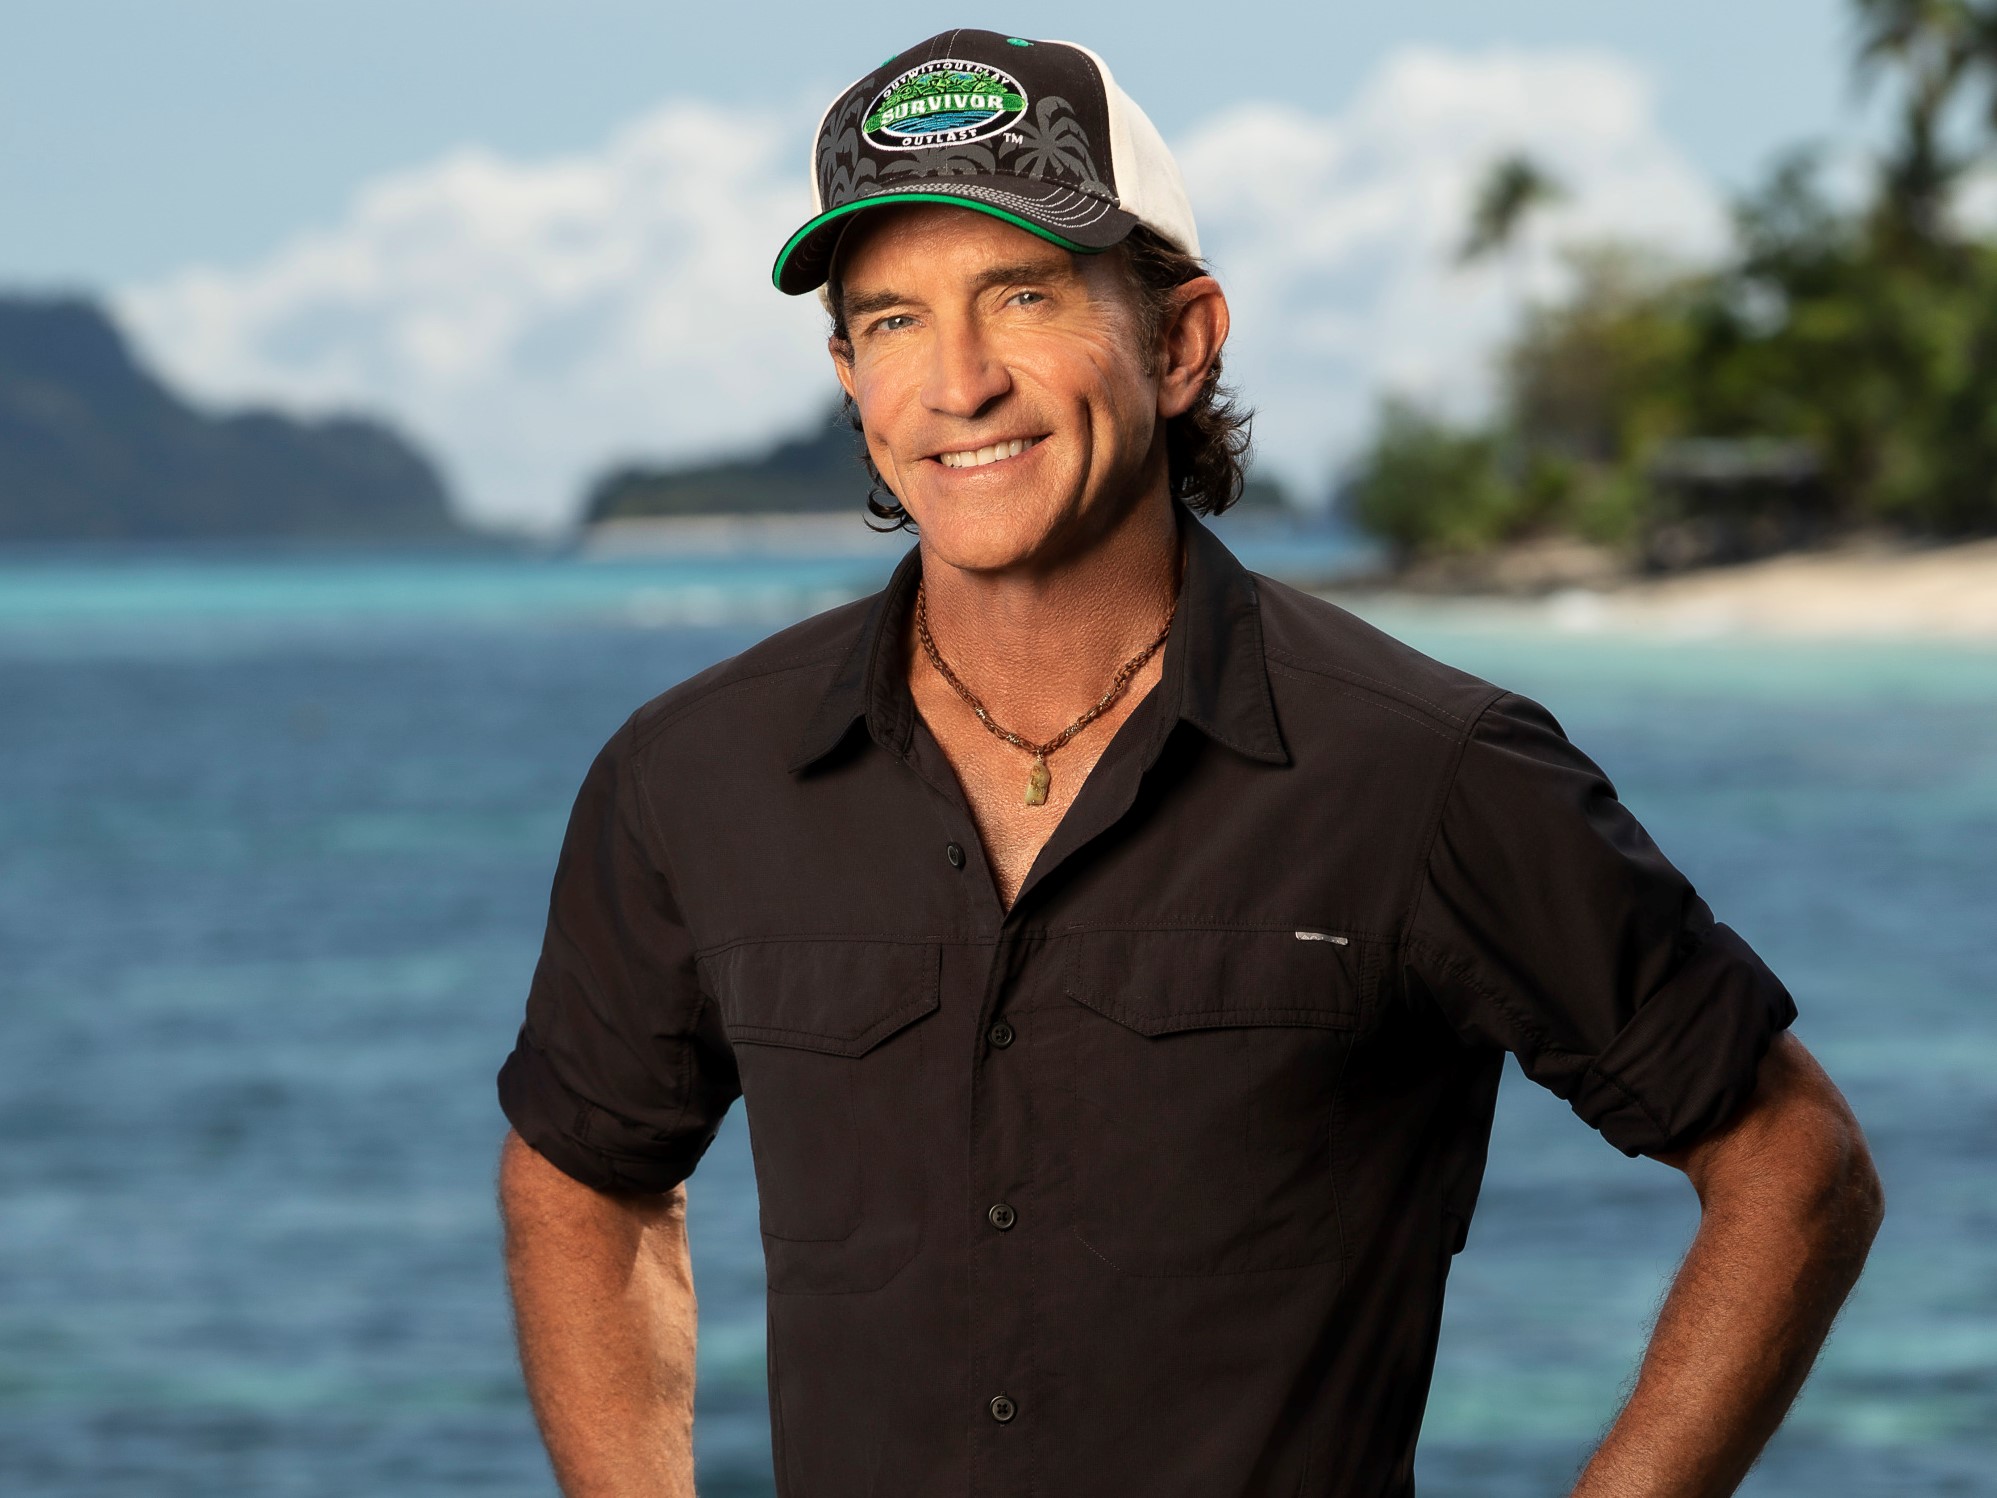 'Survivor' Season 42 host Jeff Probst wears a black short-sleeved button-up shirt and 'Survivor' hat.